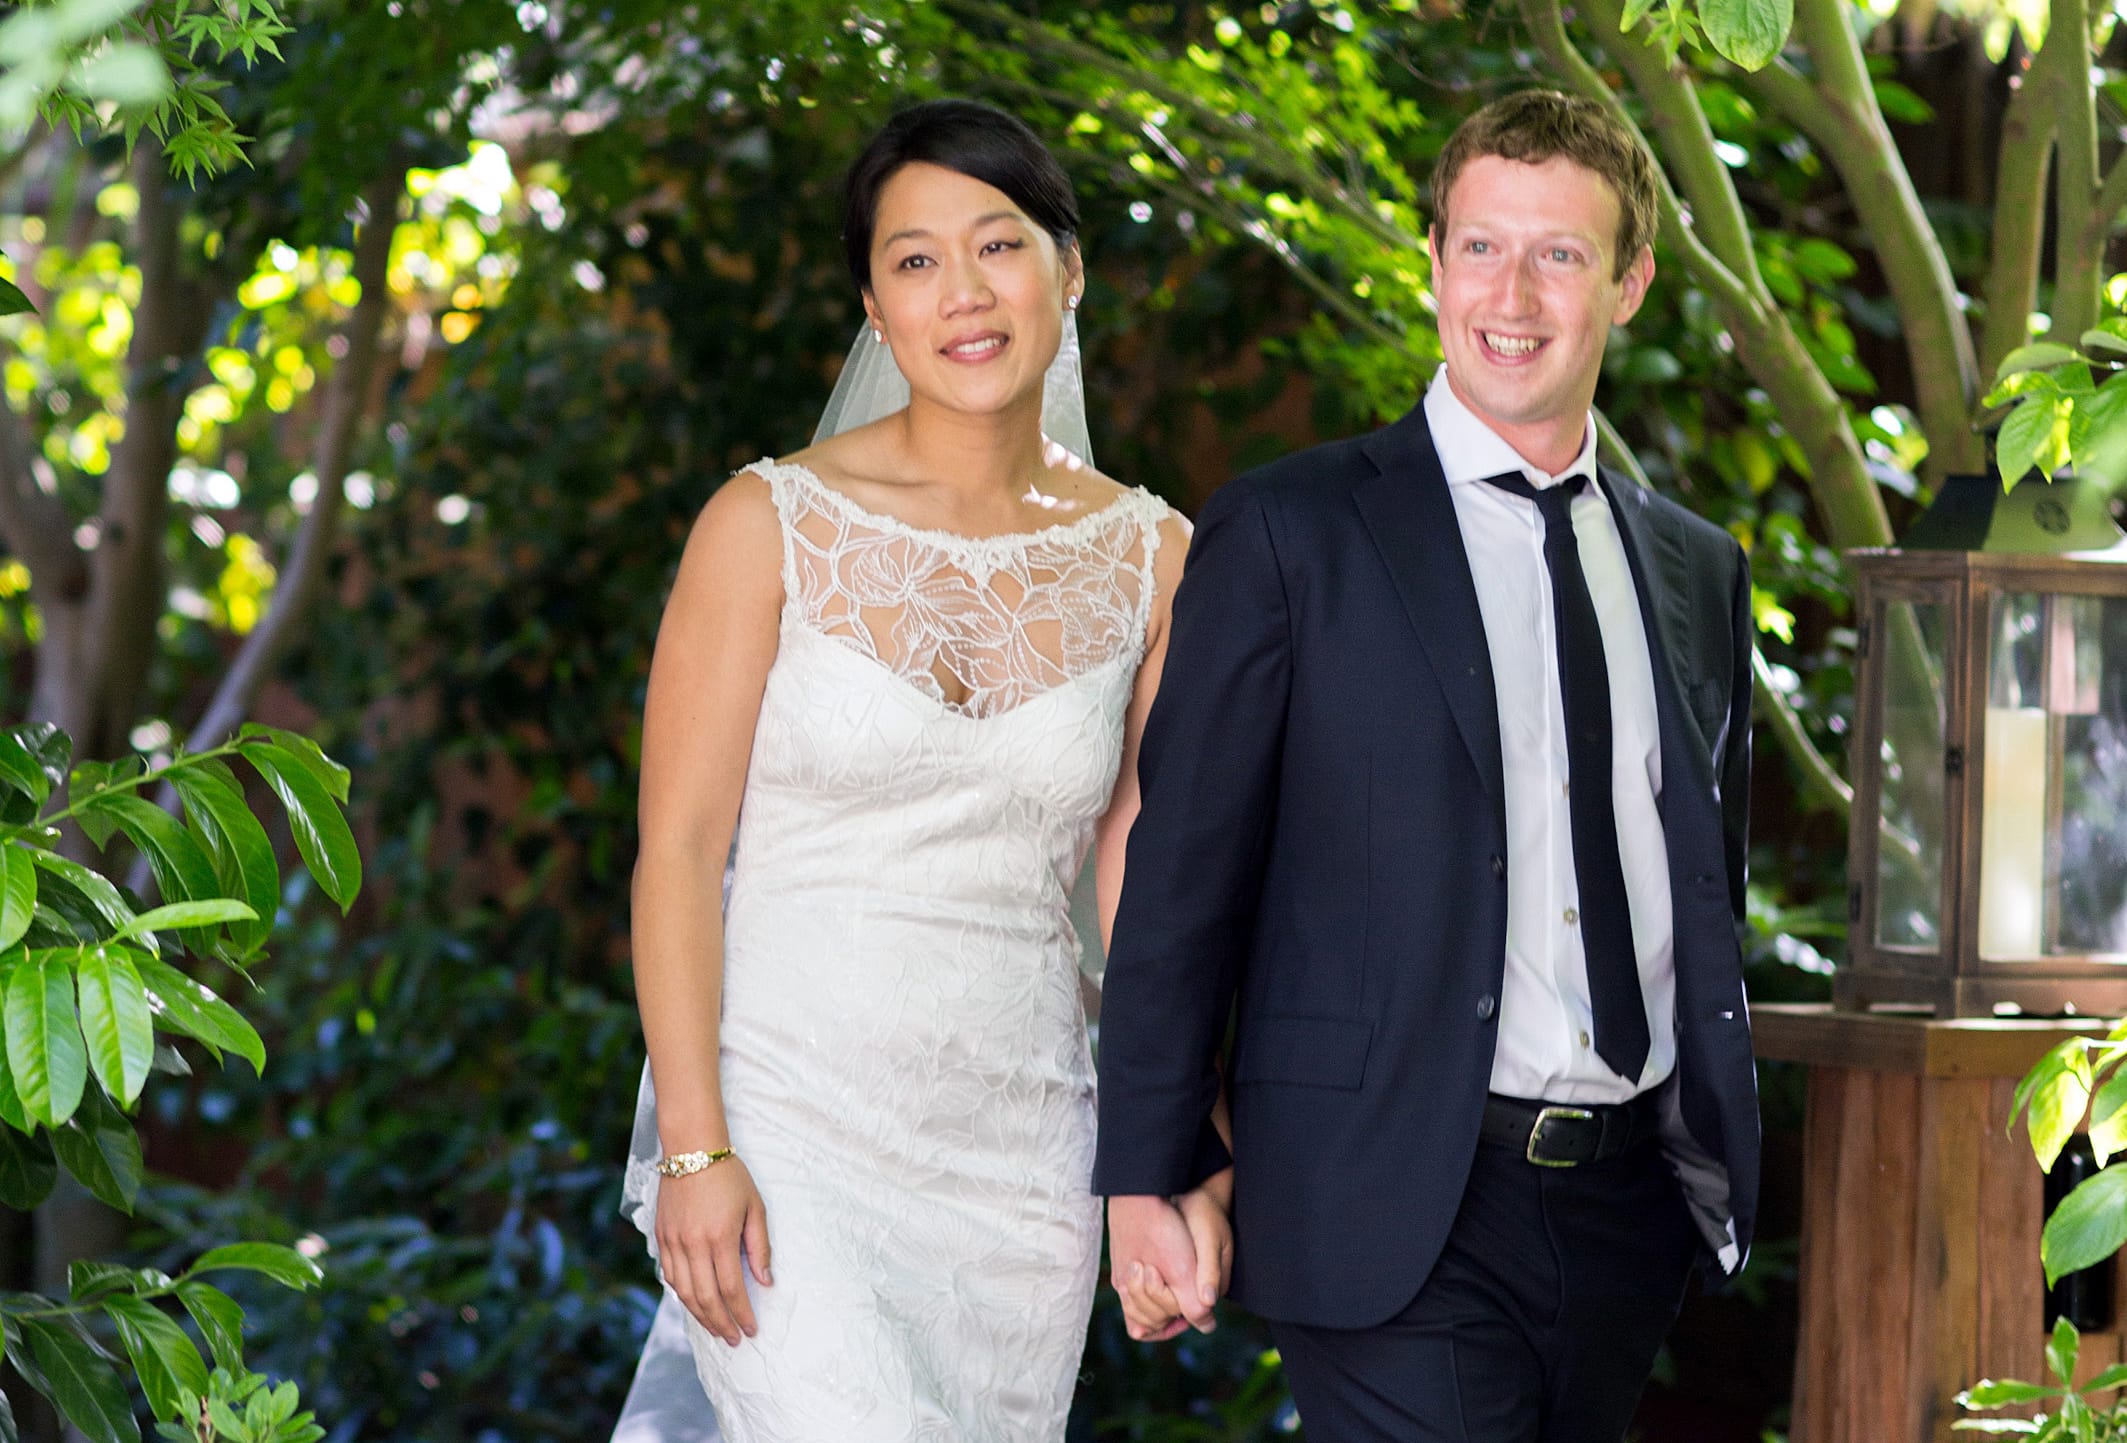 Facebook founder and CEO Mark Zuckerberg and Priscilla Chan were married Saturday at Zuckerberg's Palo Alto, Calif., home.